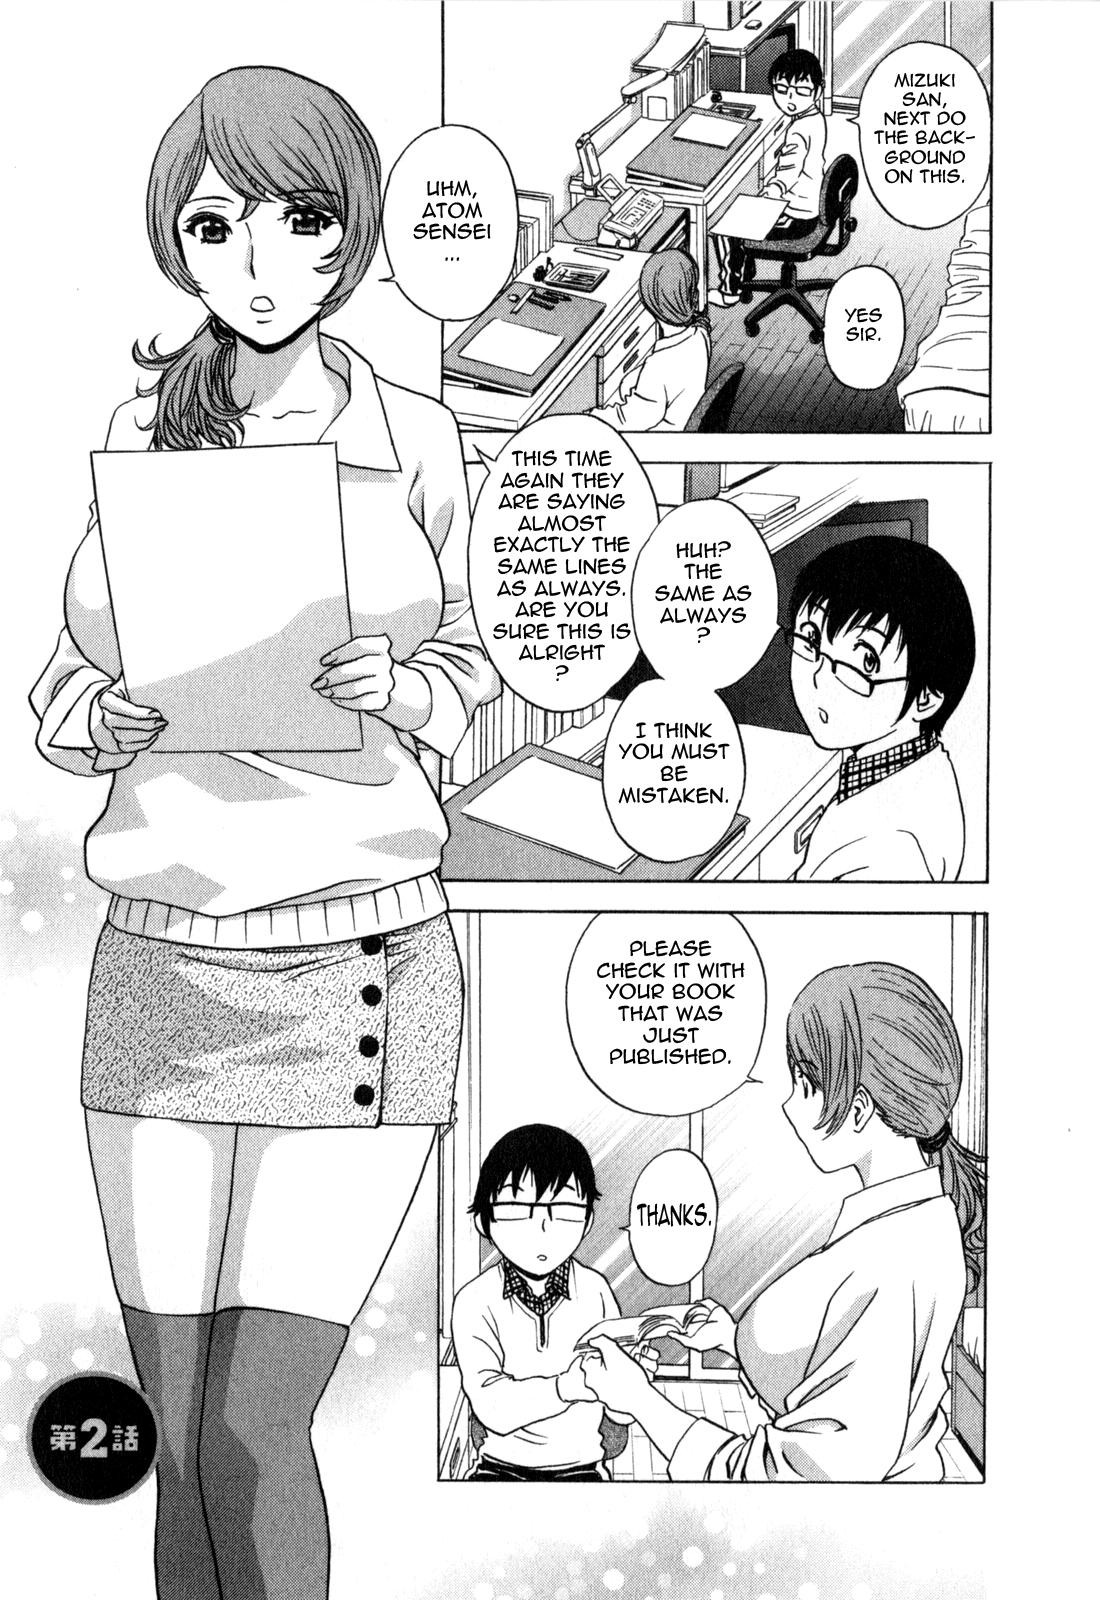 Life with Married Women Just Like a Manga 3 26